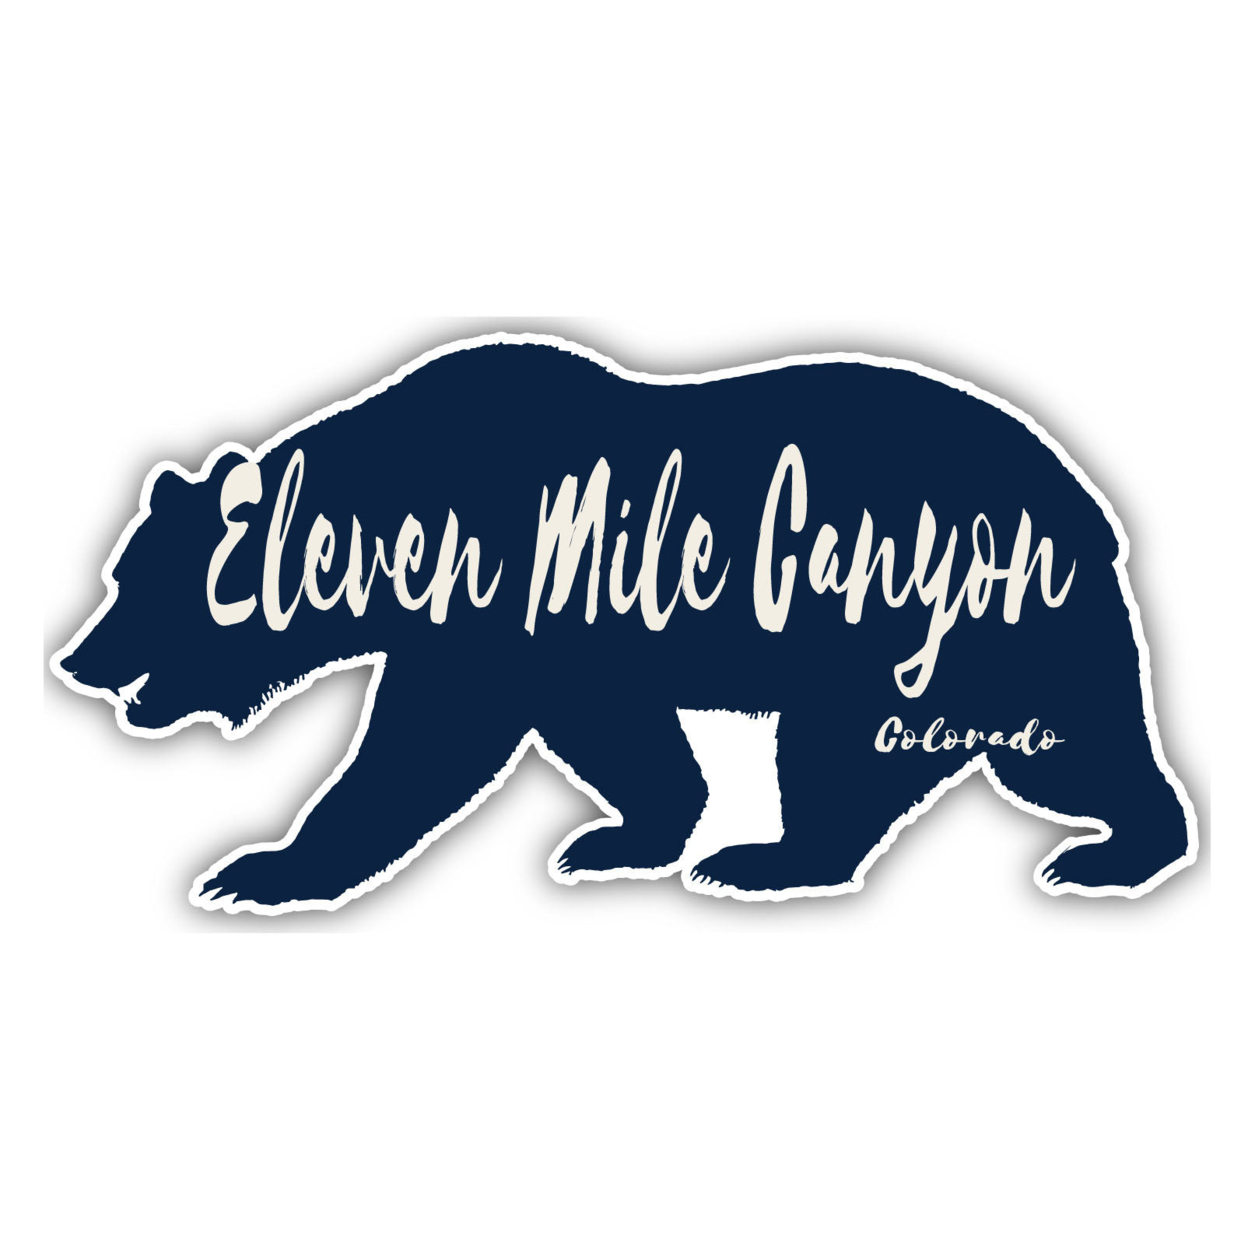 Eleven Mile Canyon Colorado Souvenir Decorative Stickers (Choose Theme And Size) - Single Unit, 6-Inch, Tent